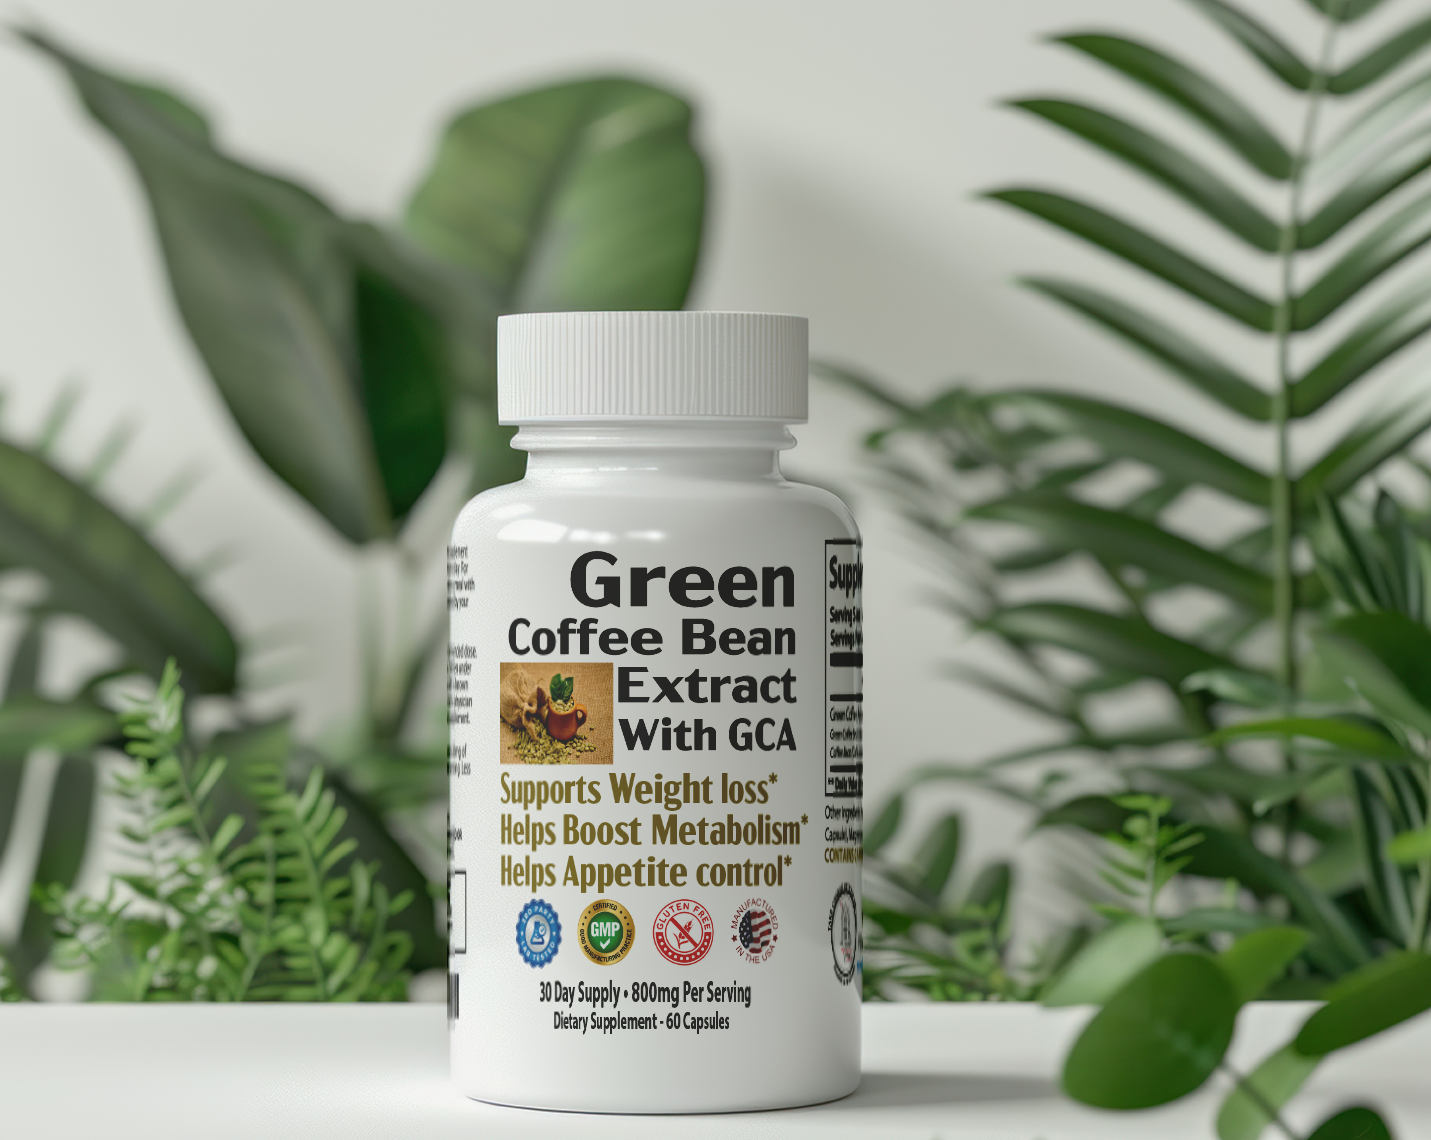 Green Coffee Bean Extract With GCA